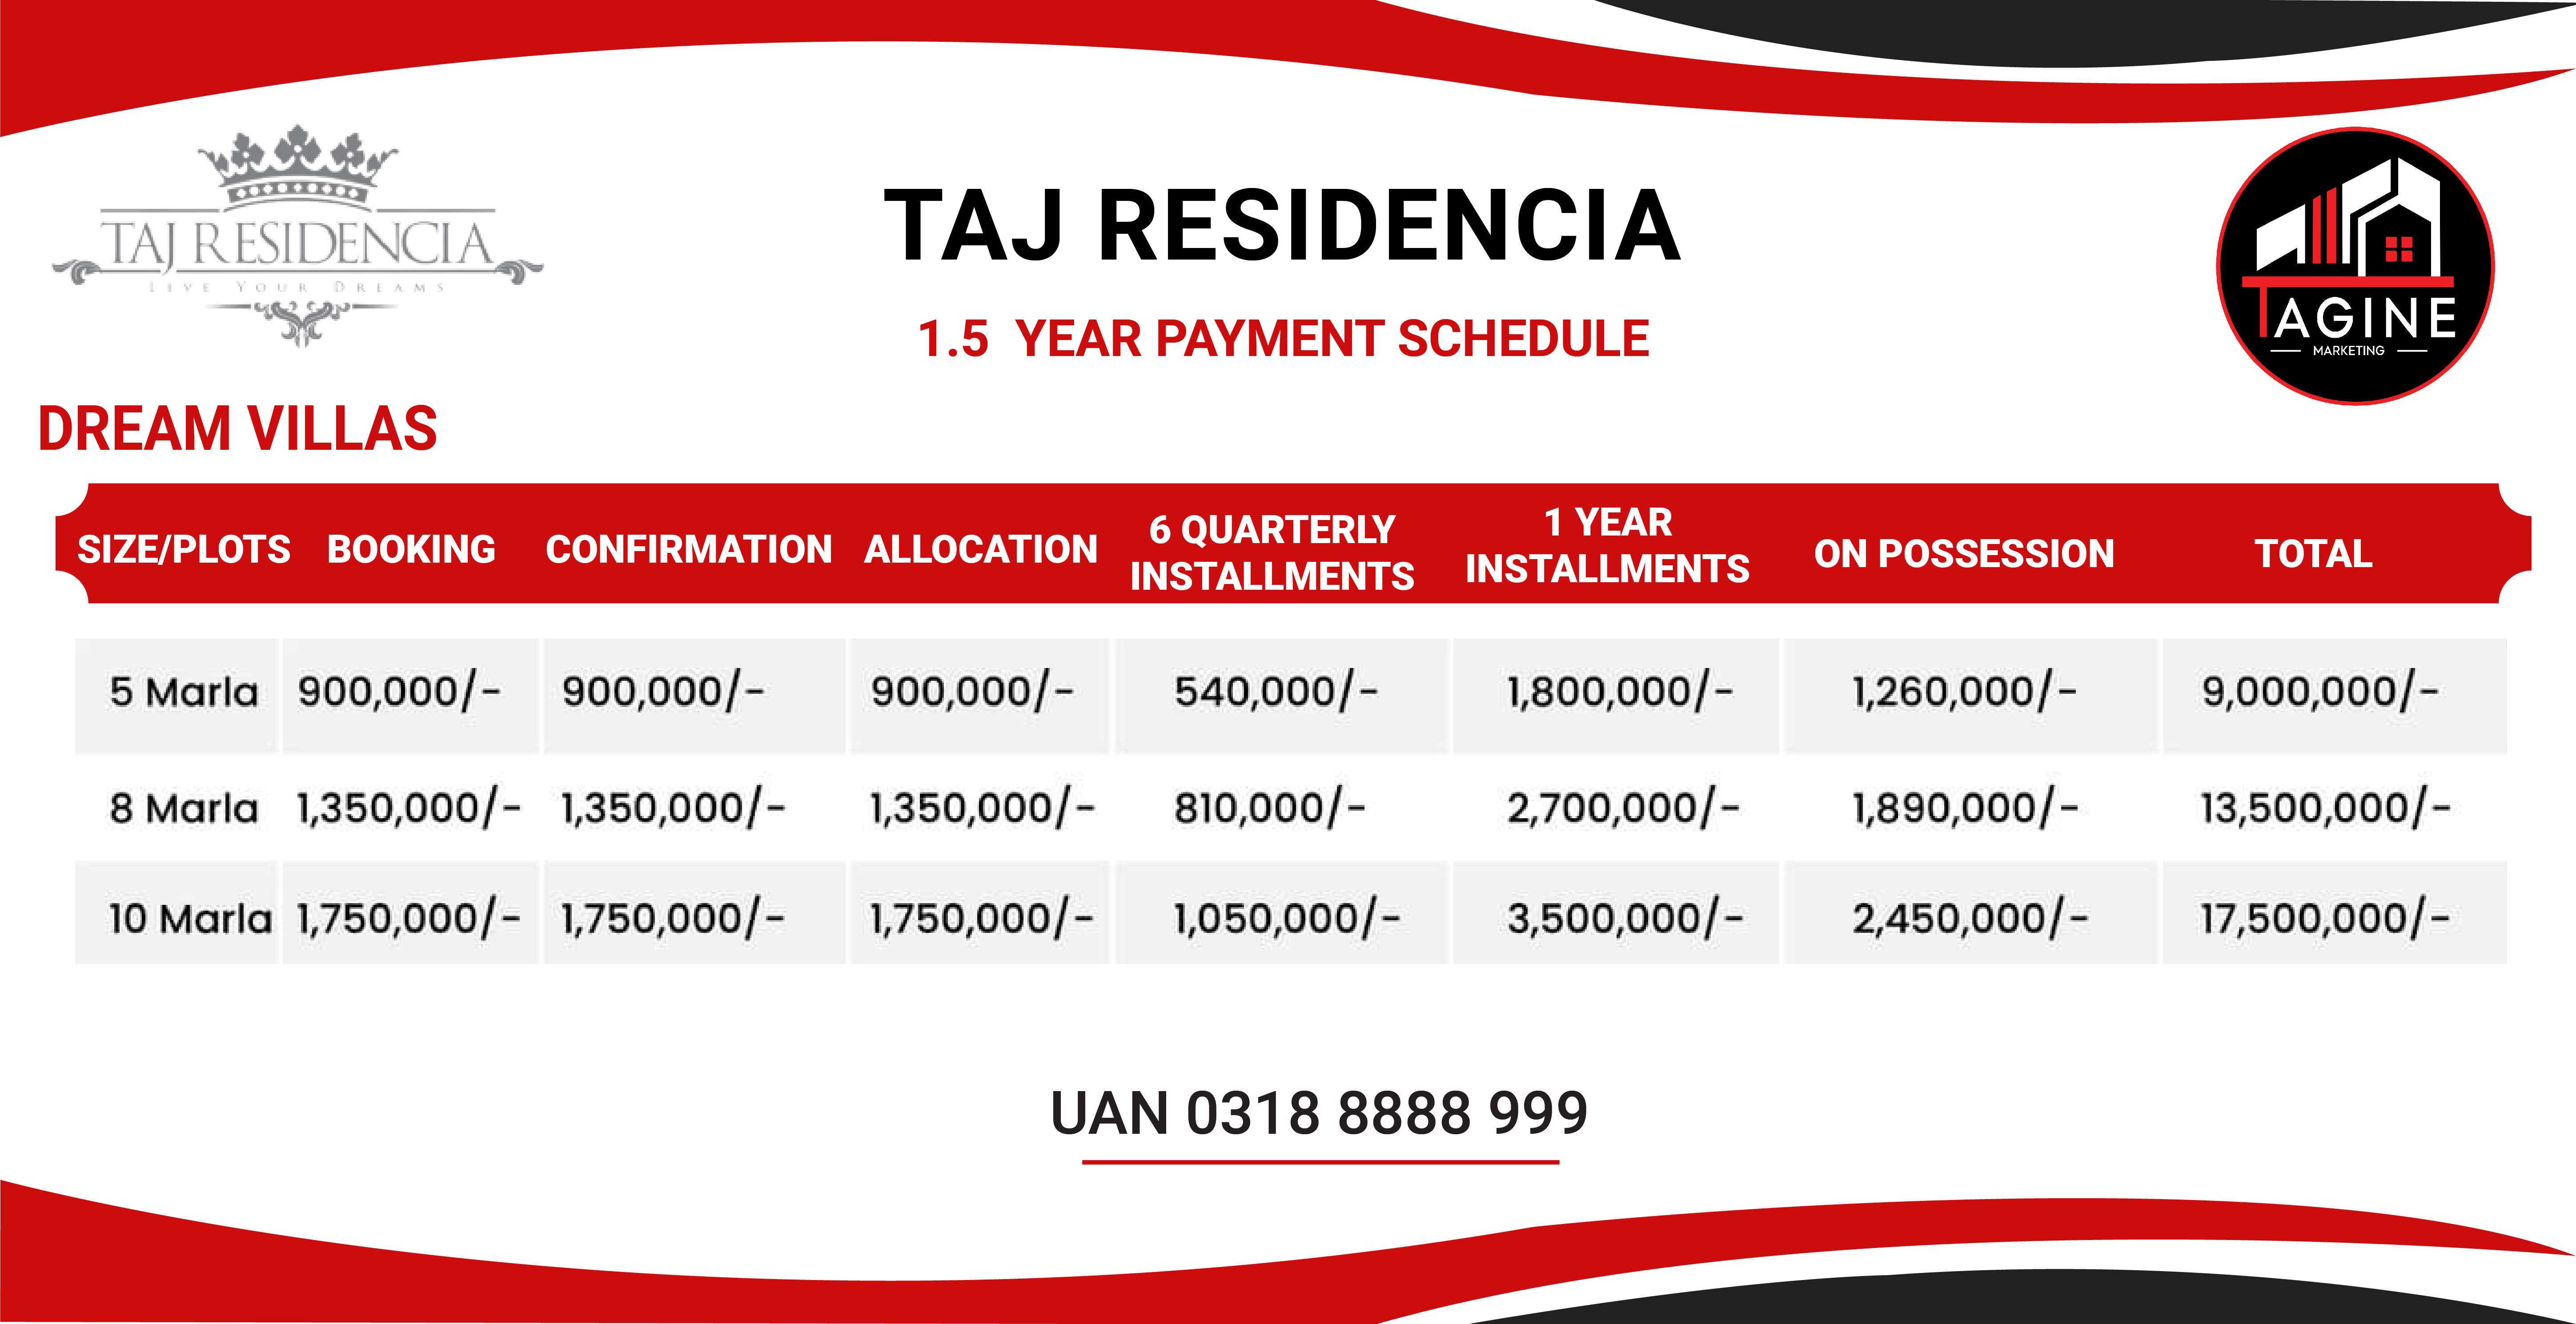 TAJ-RESIDENCIA-PAYMENT-PLAN-1.5-YEAR-DREAM-VILLAS